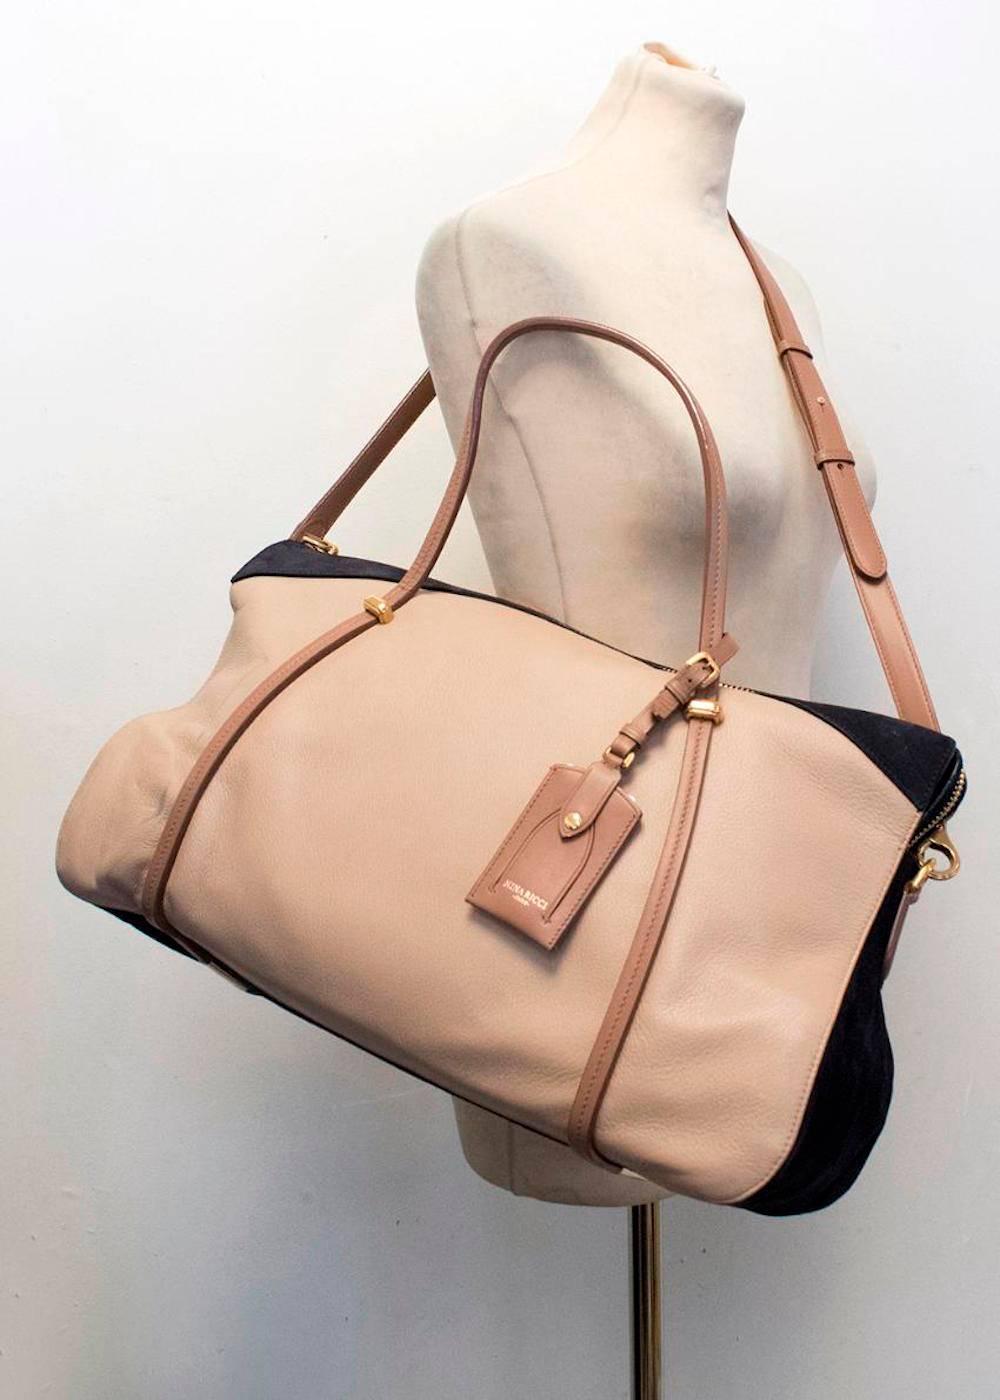 Nina Ricci Paris Beige Leather and Suede Shoulder Bag  For Sale 1